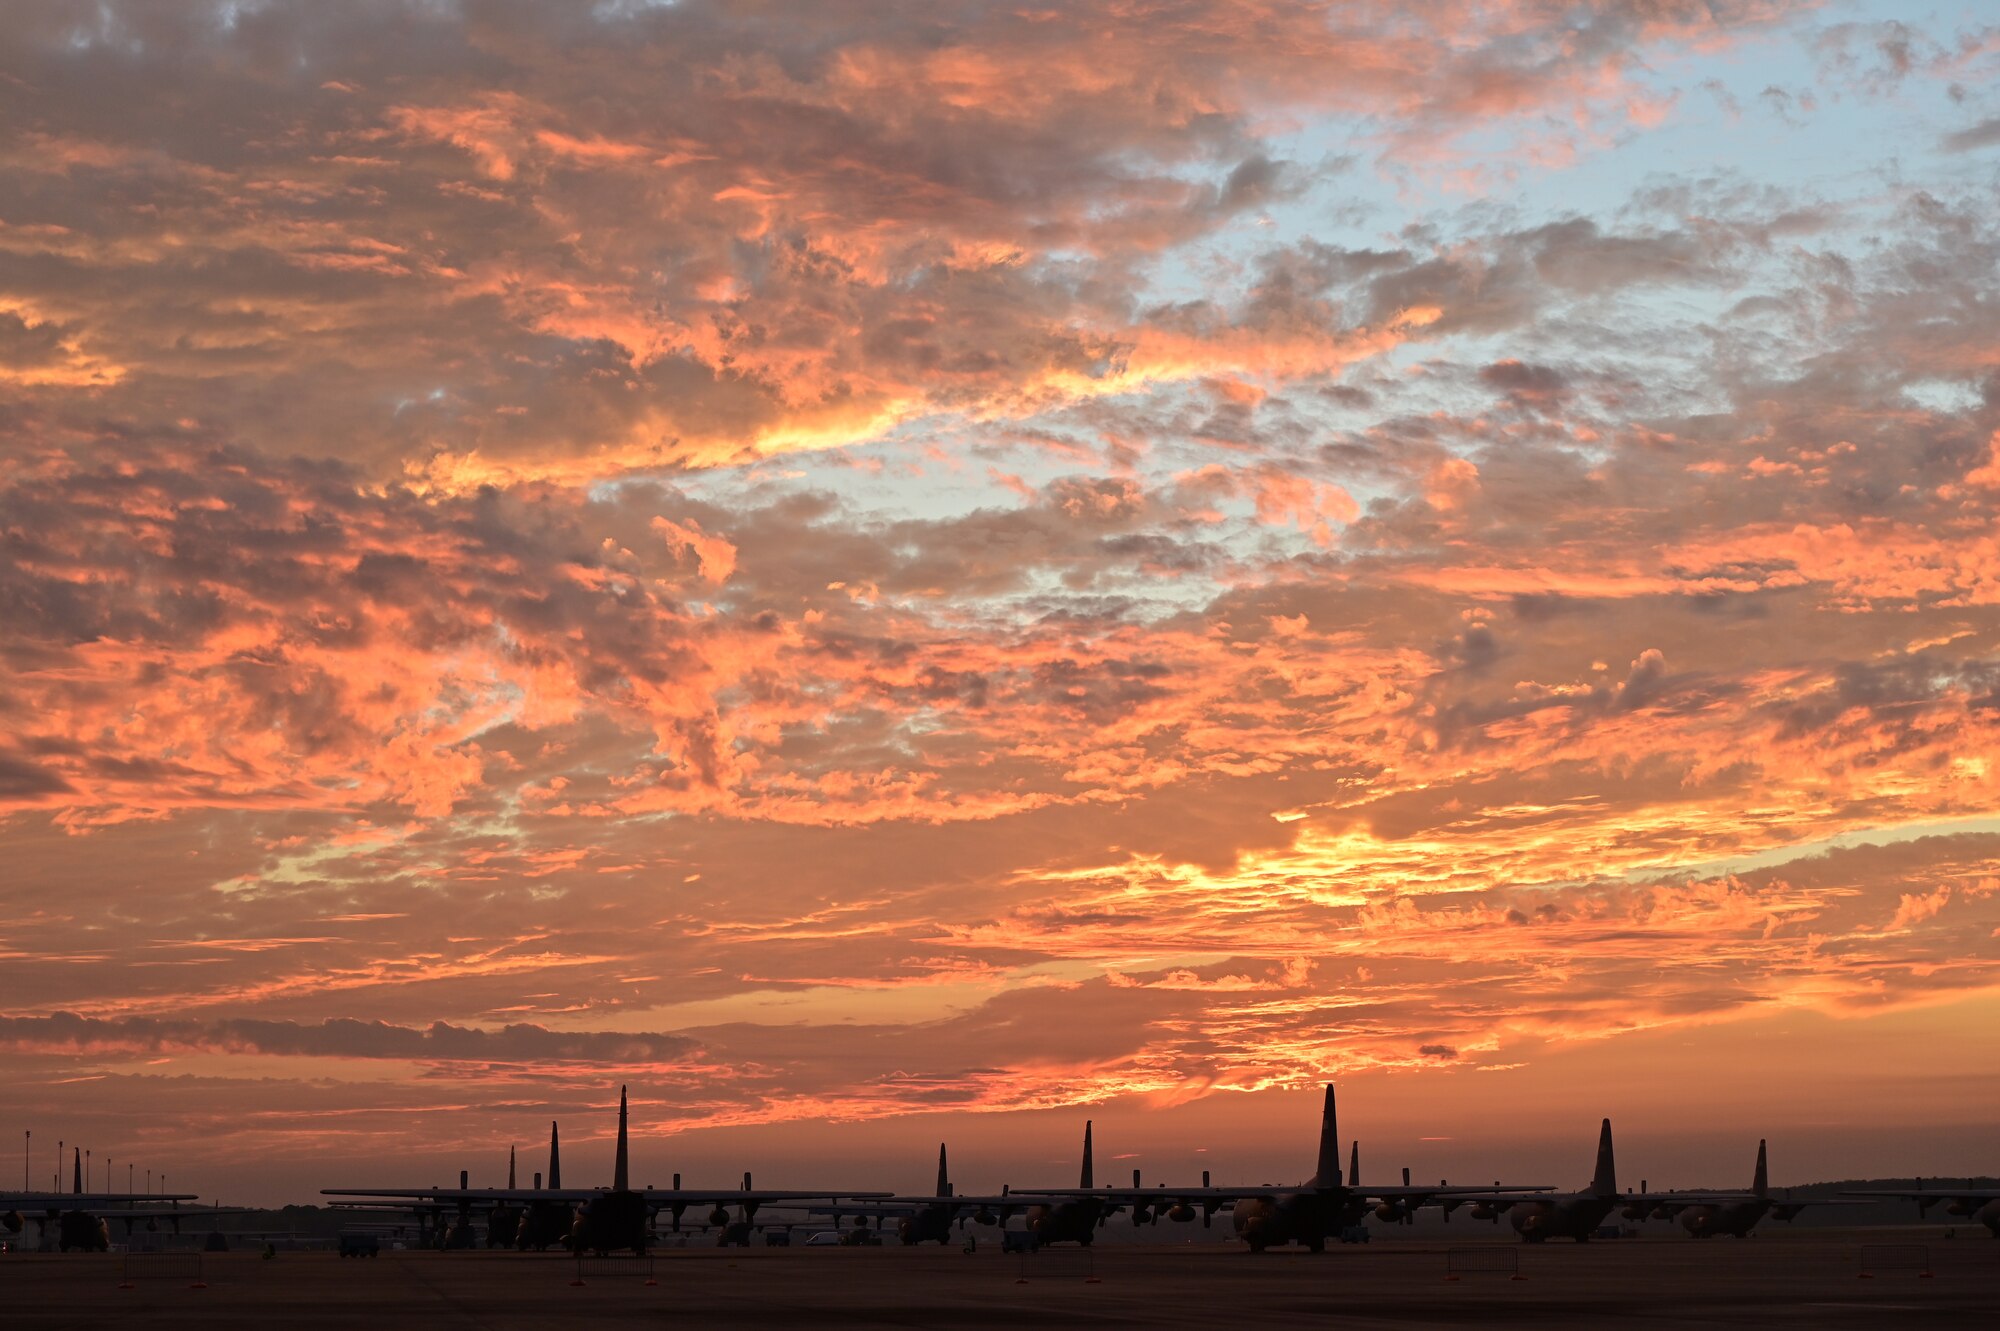 Planes sit on flight line at sunset